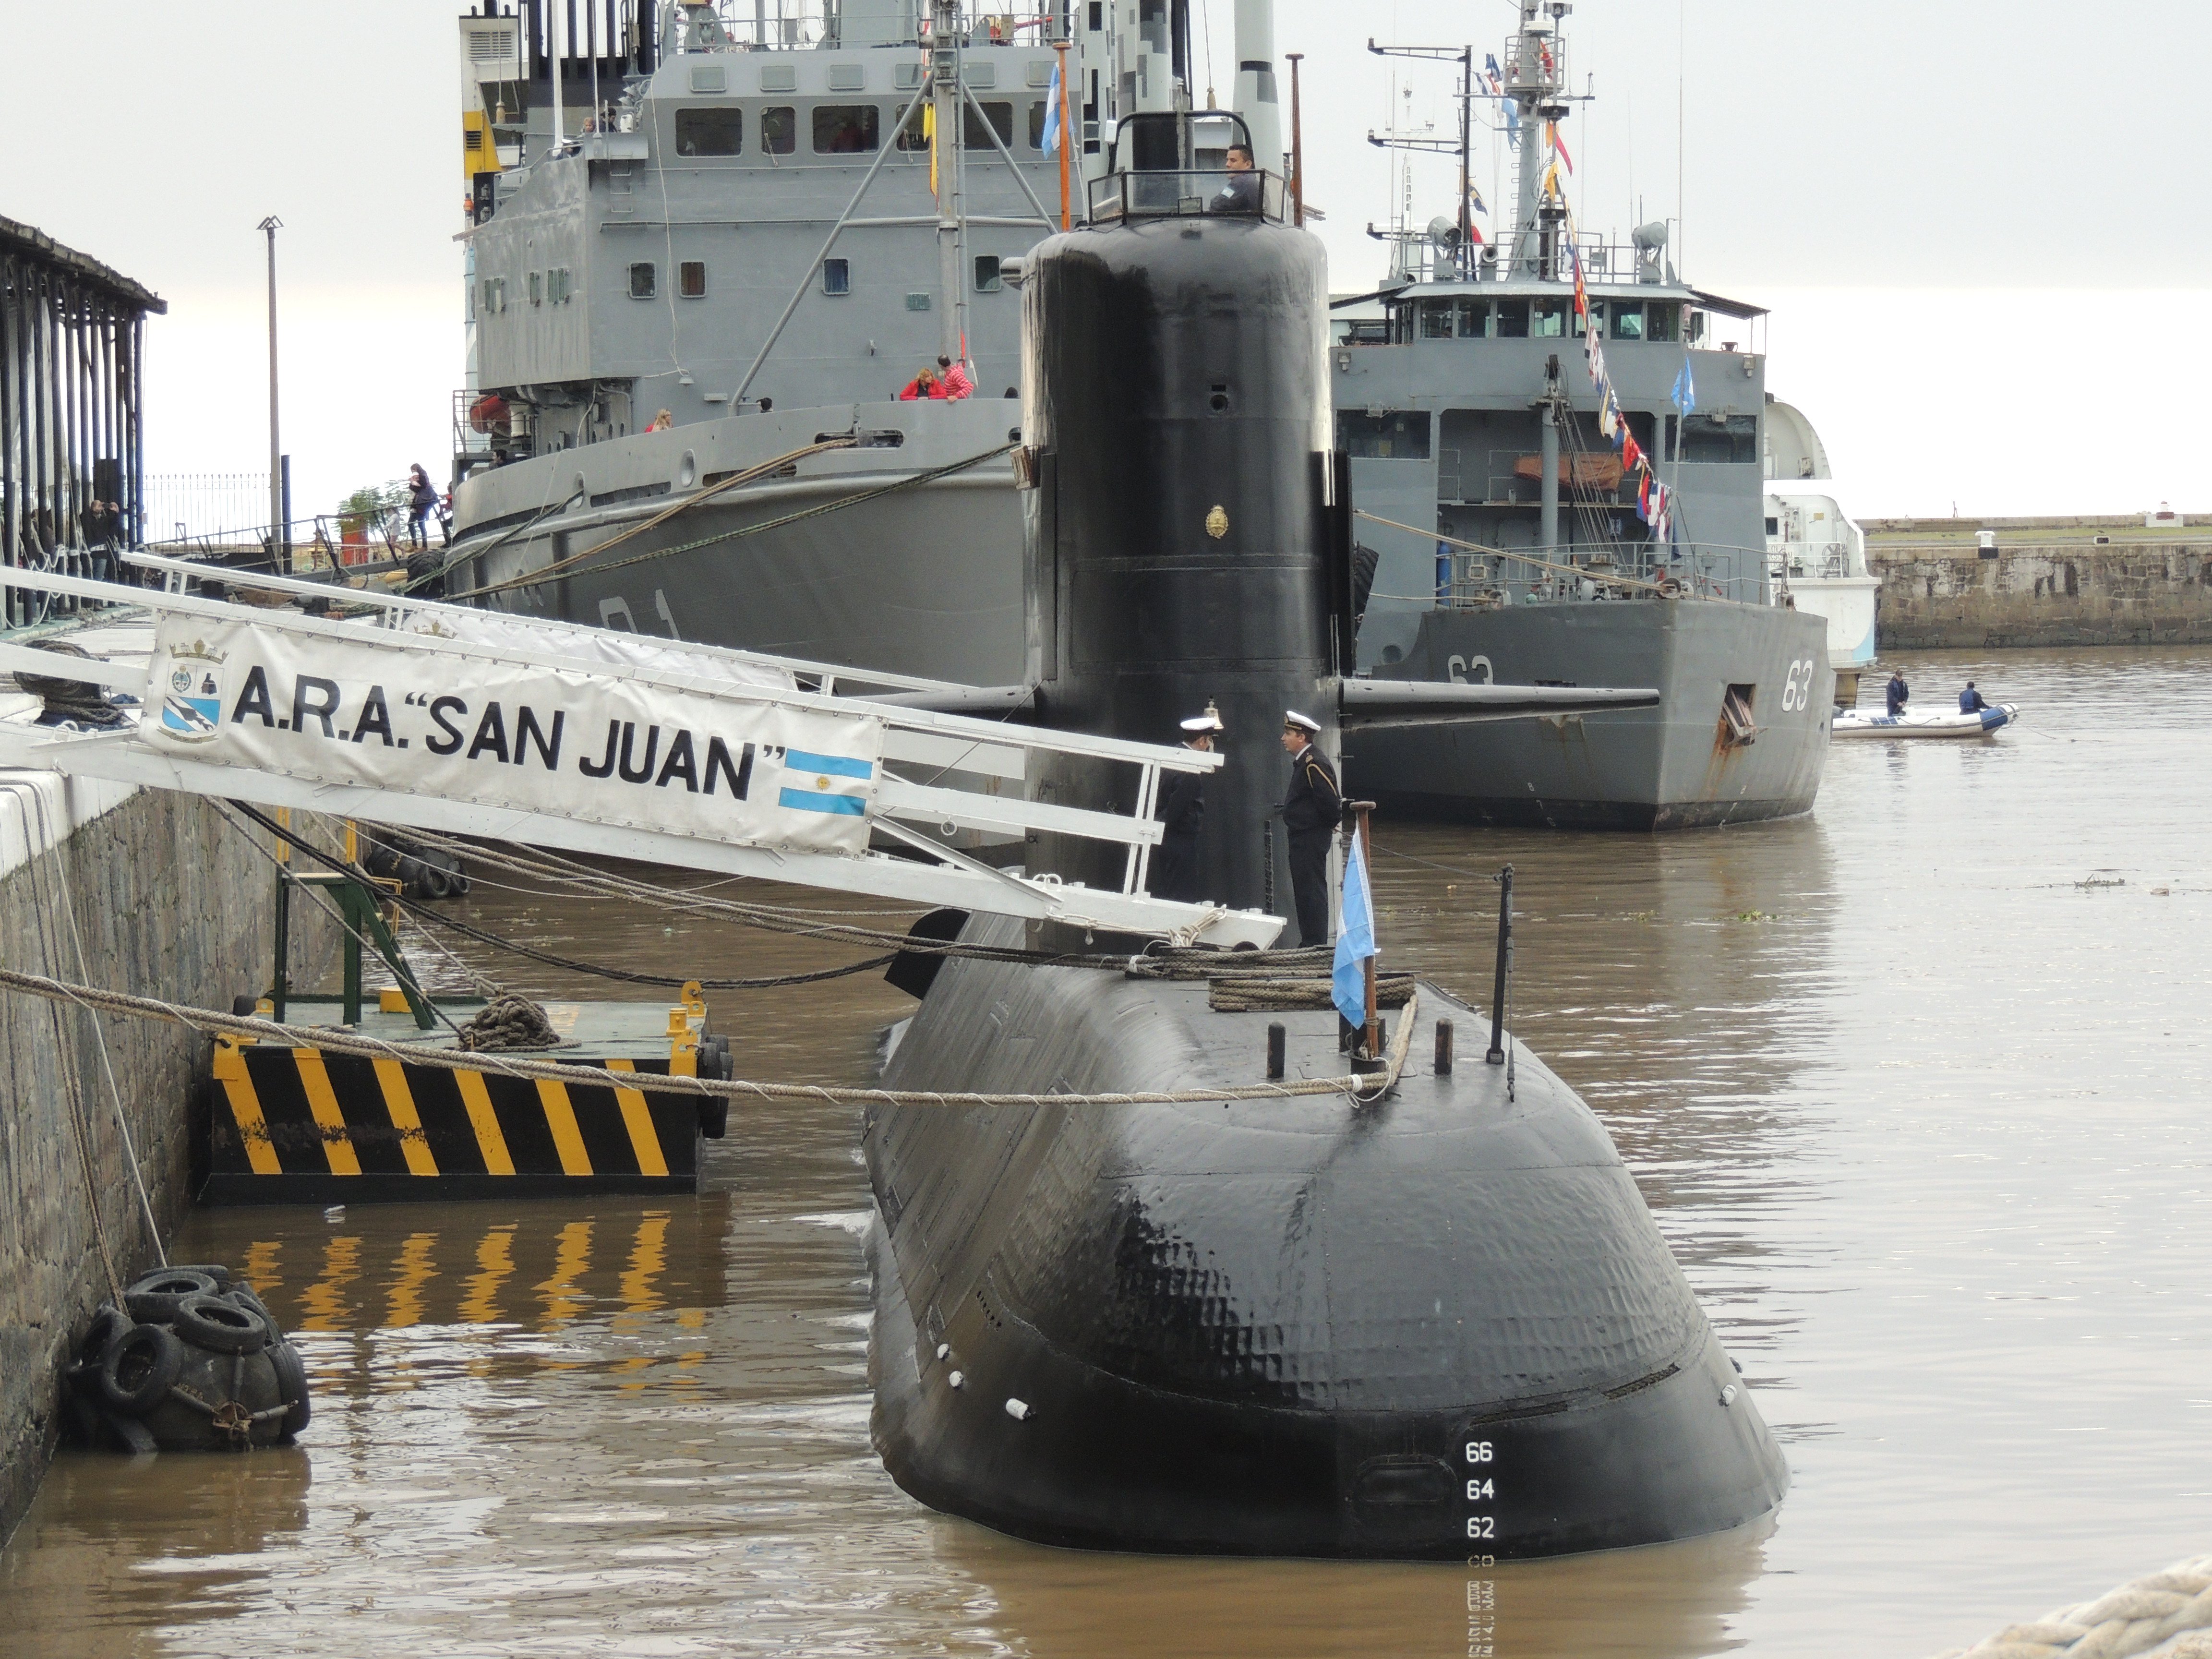 Submarino_ARA_San_Juan_33866567363.jpg